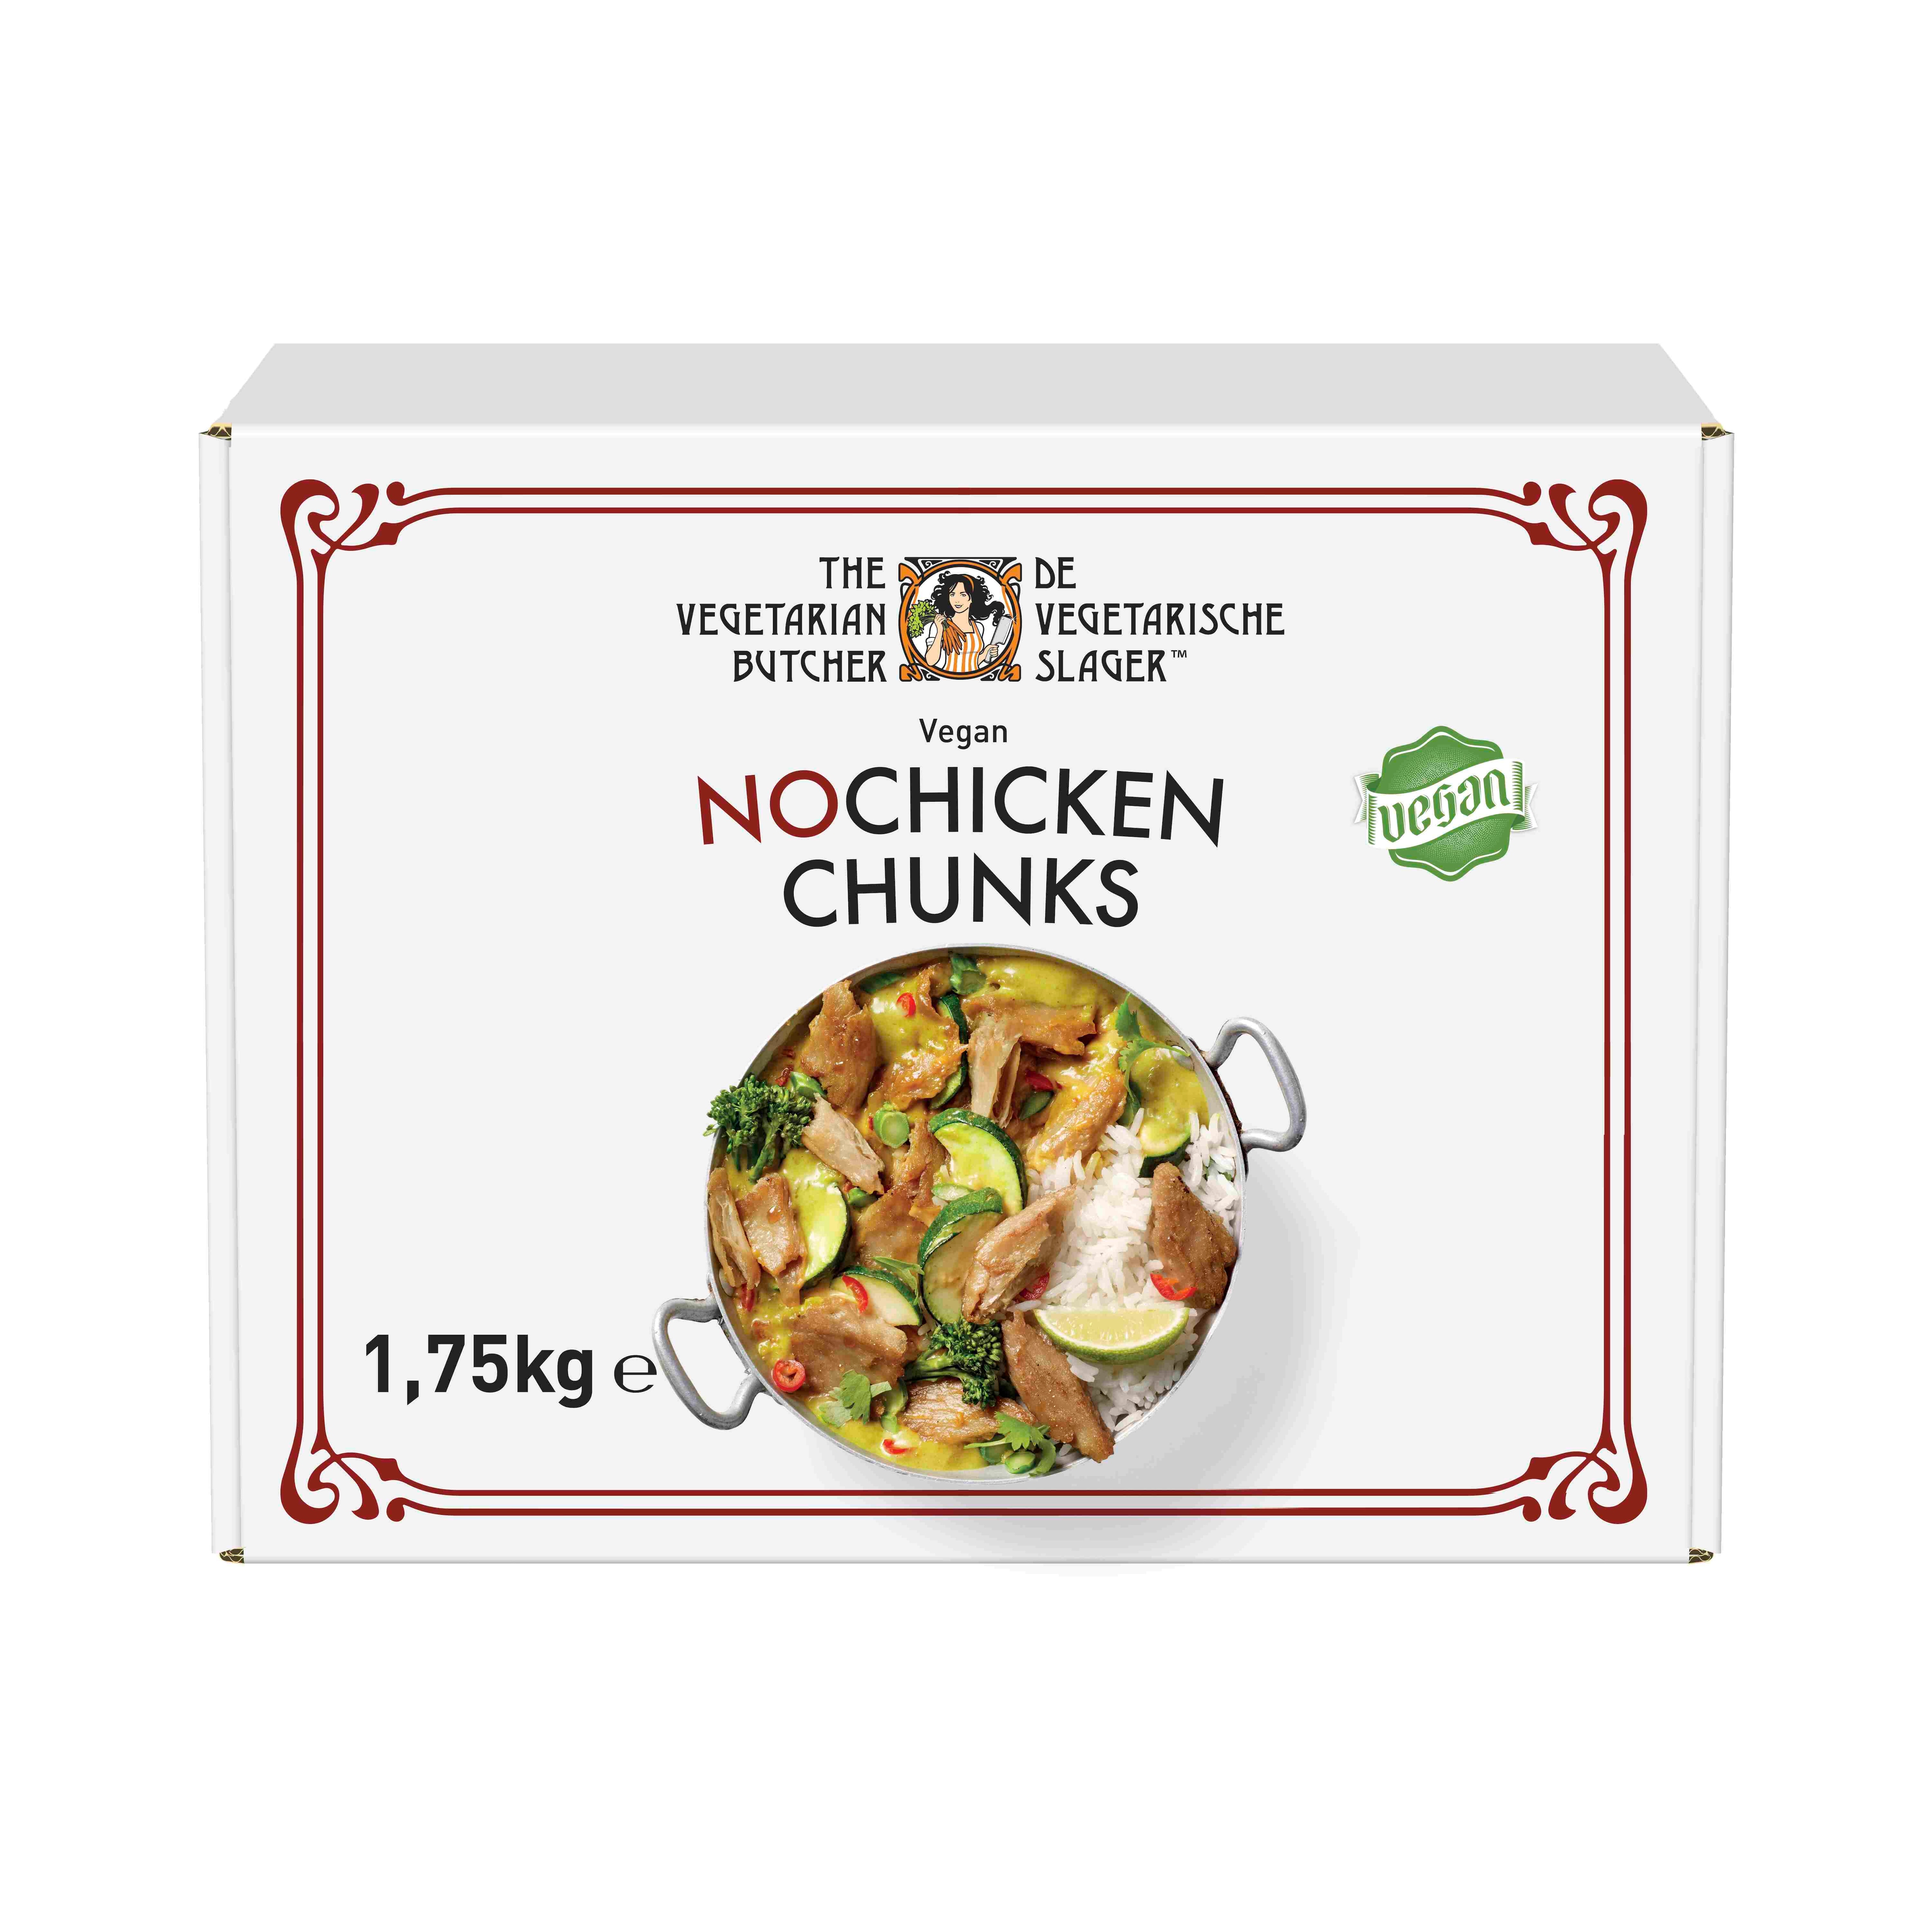 The Vegetarian Butcher NoChicken Chunks 1,75 kg - Προϊόντα φυτικής προέλευσης με γεύση, μαγείρεμα, υφή και αίσθηση σαν το κρέας.